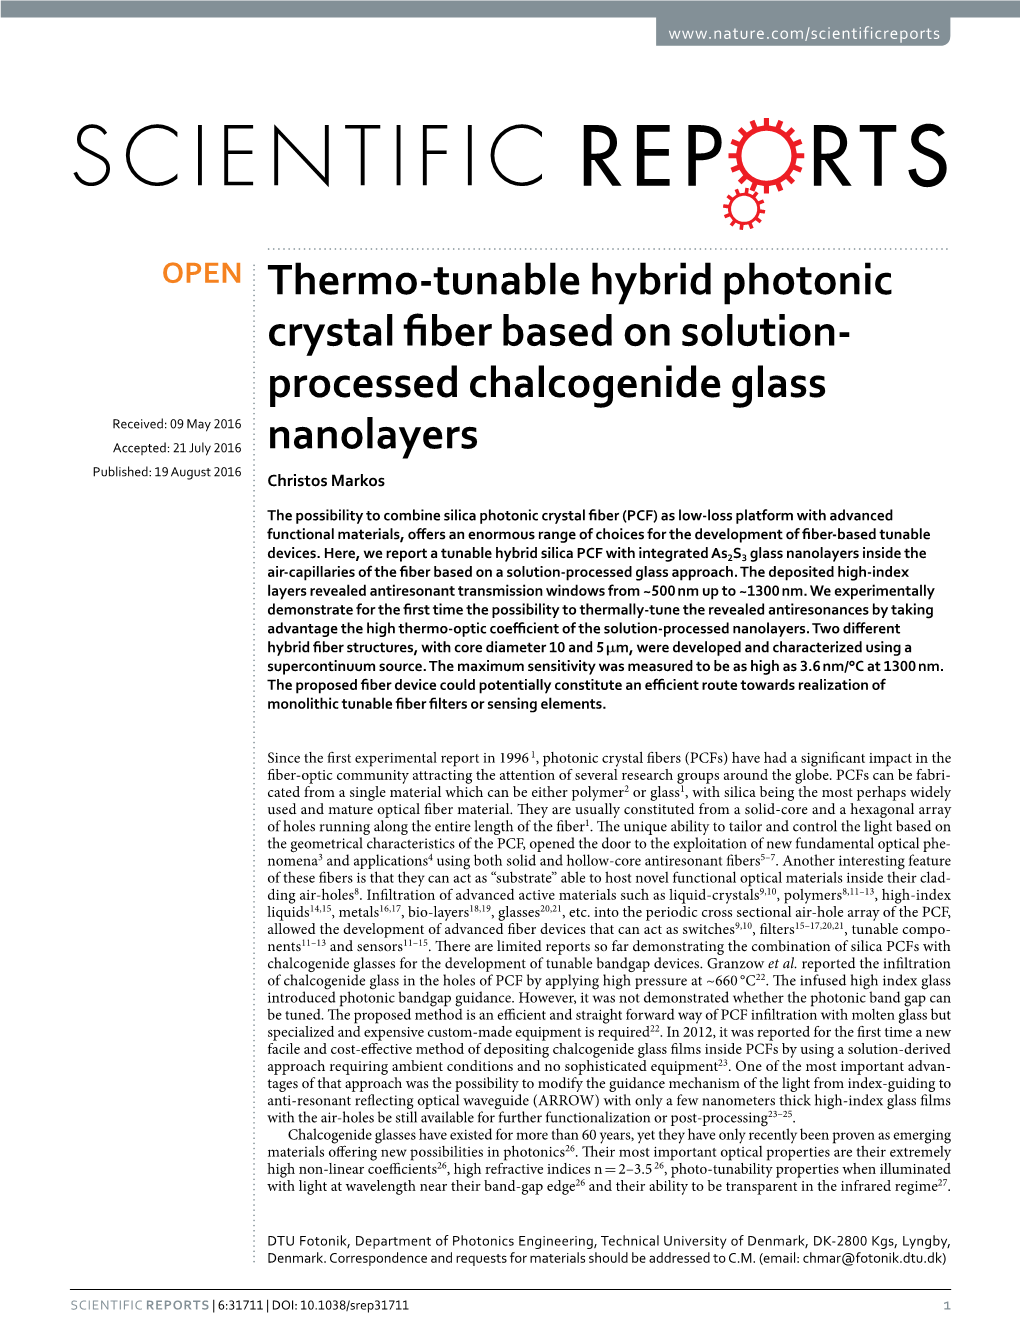 Thermo-Tunable Hybrid Photonic Crystal Fiber Based on Solution